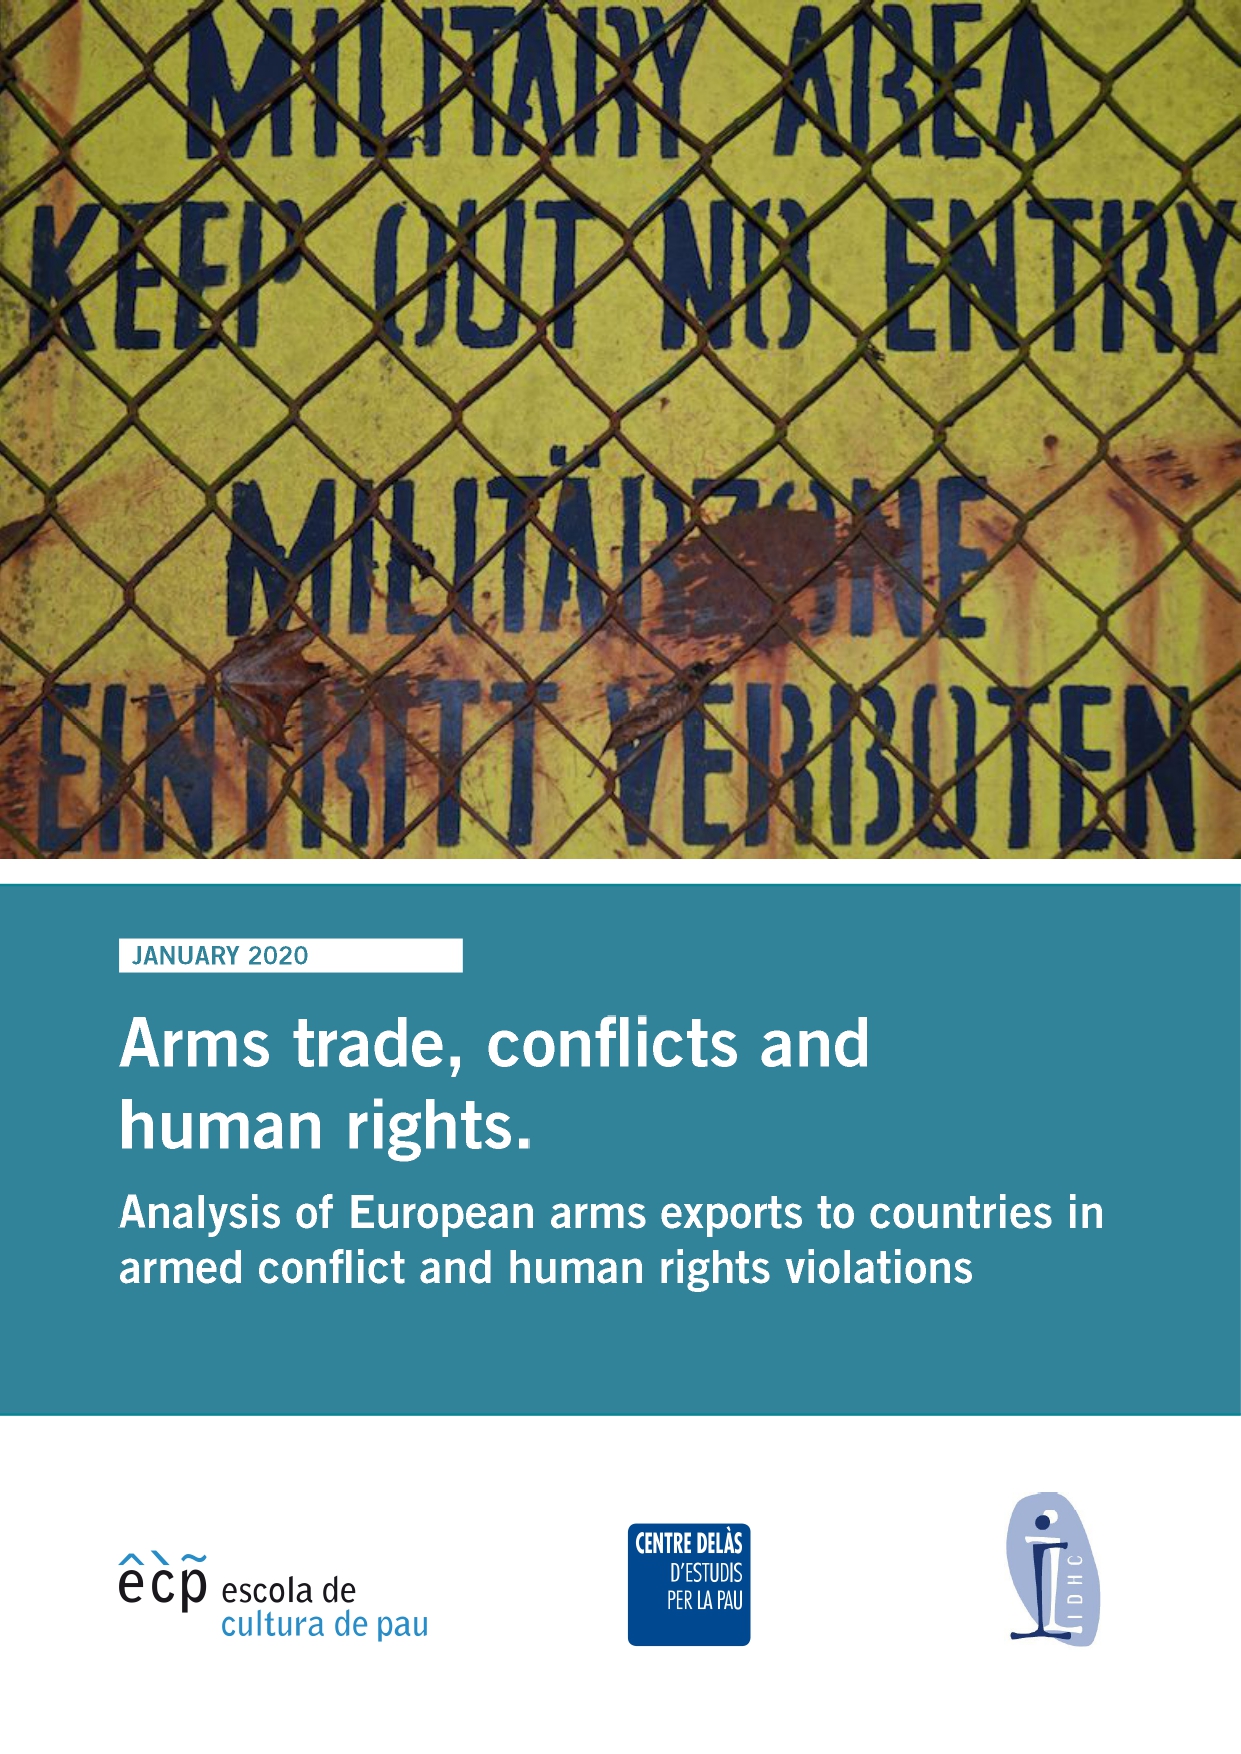 portada Informe ArmsTrade Conflicts HR CentreDelas ECP IDHC web ENG